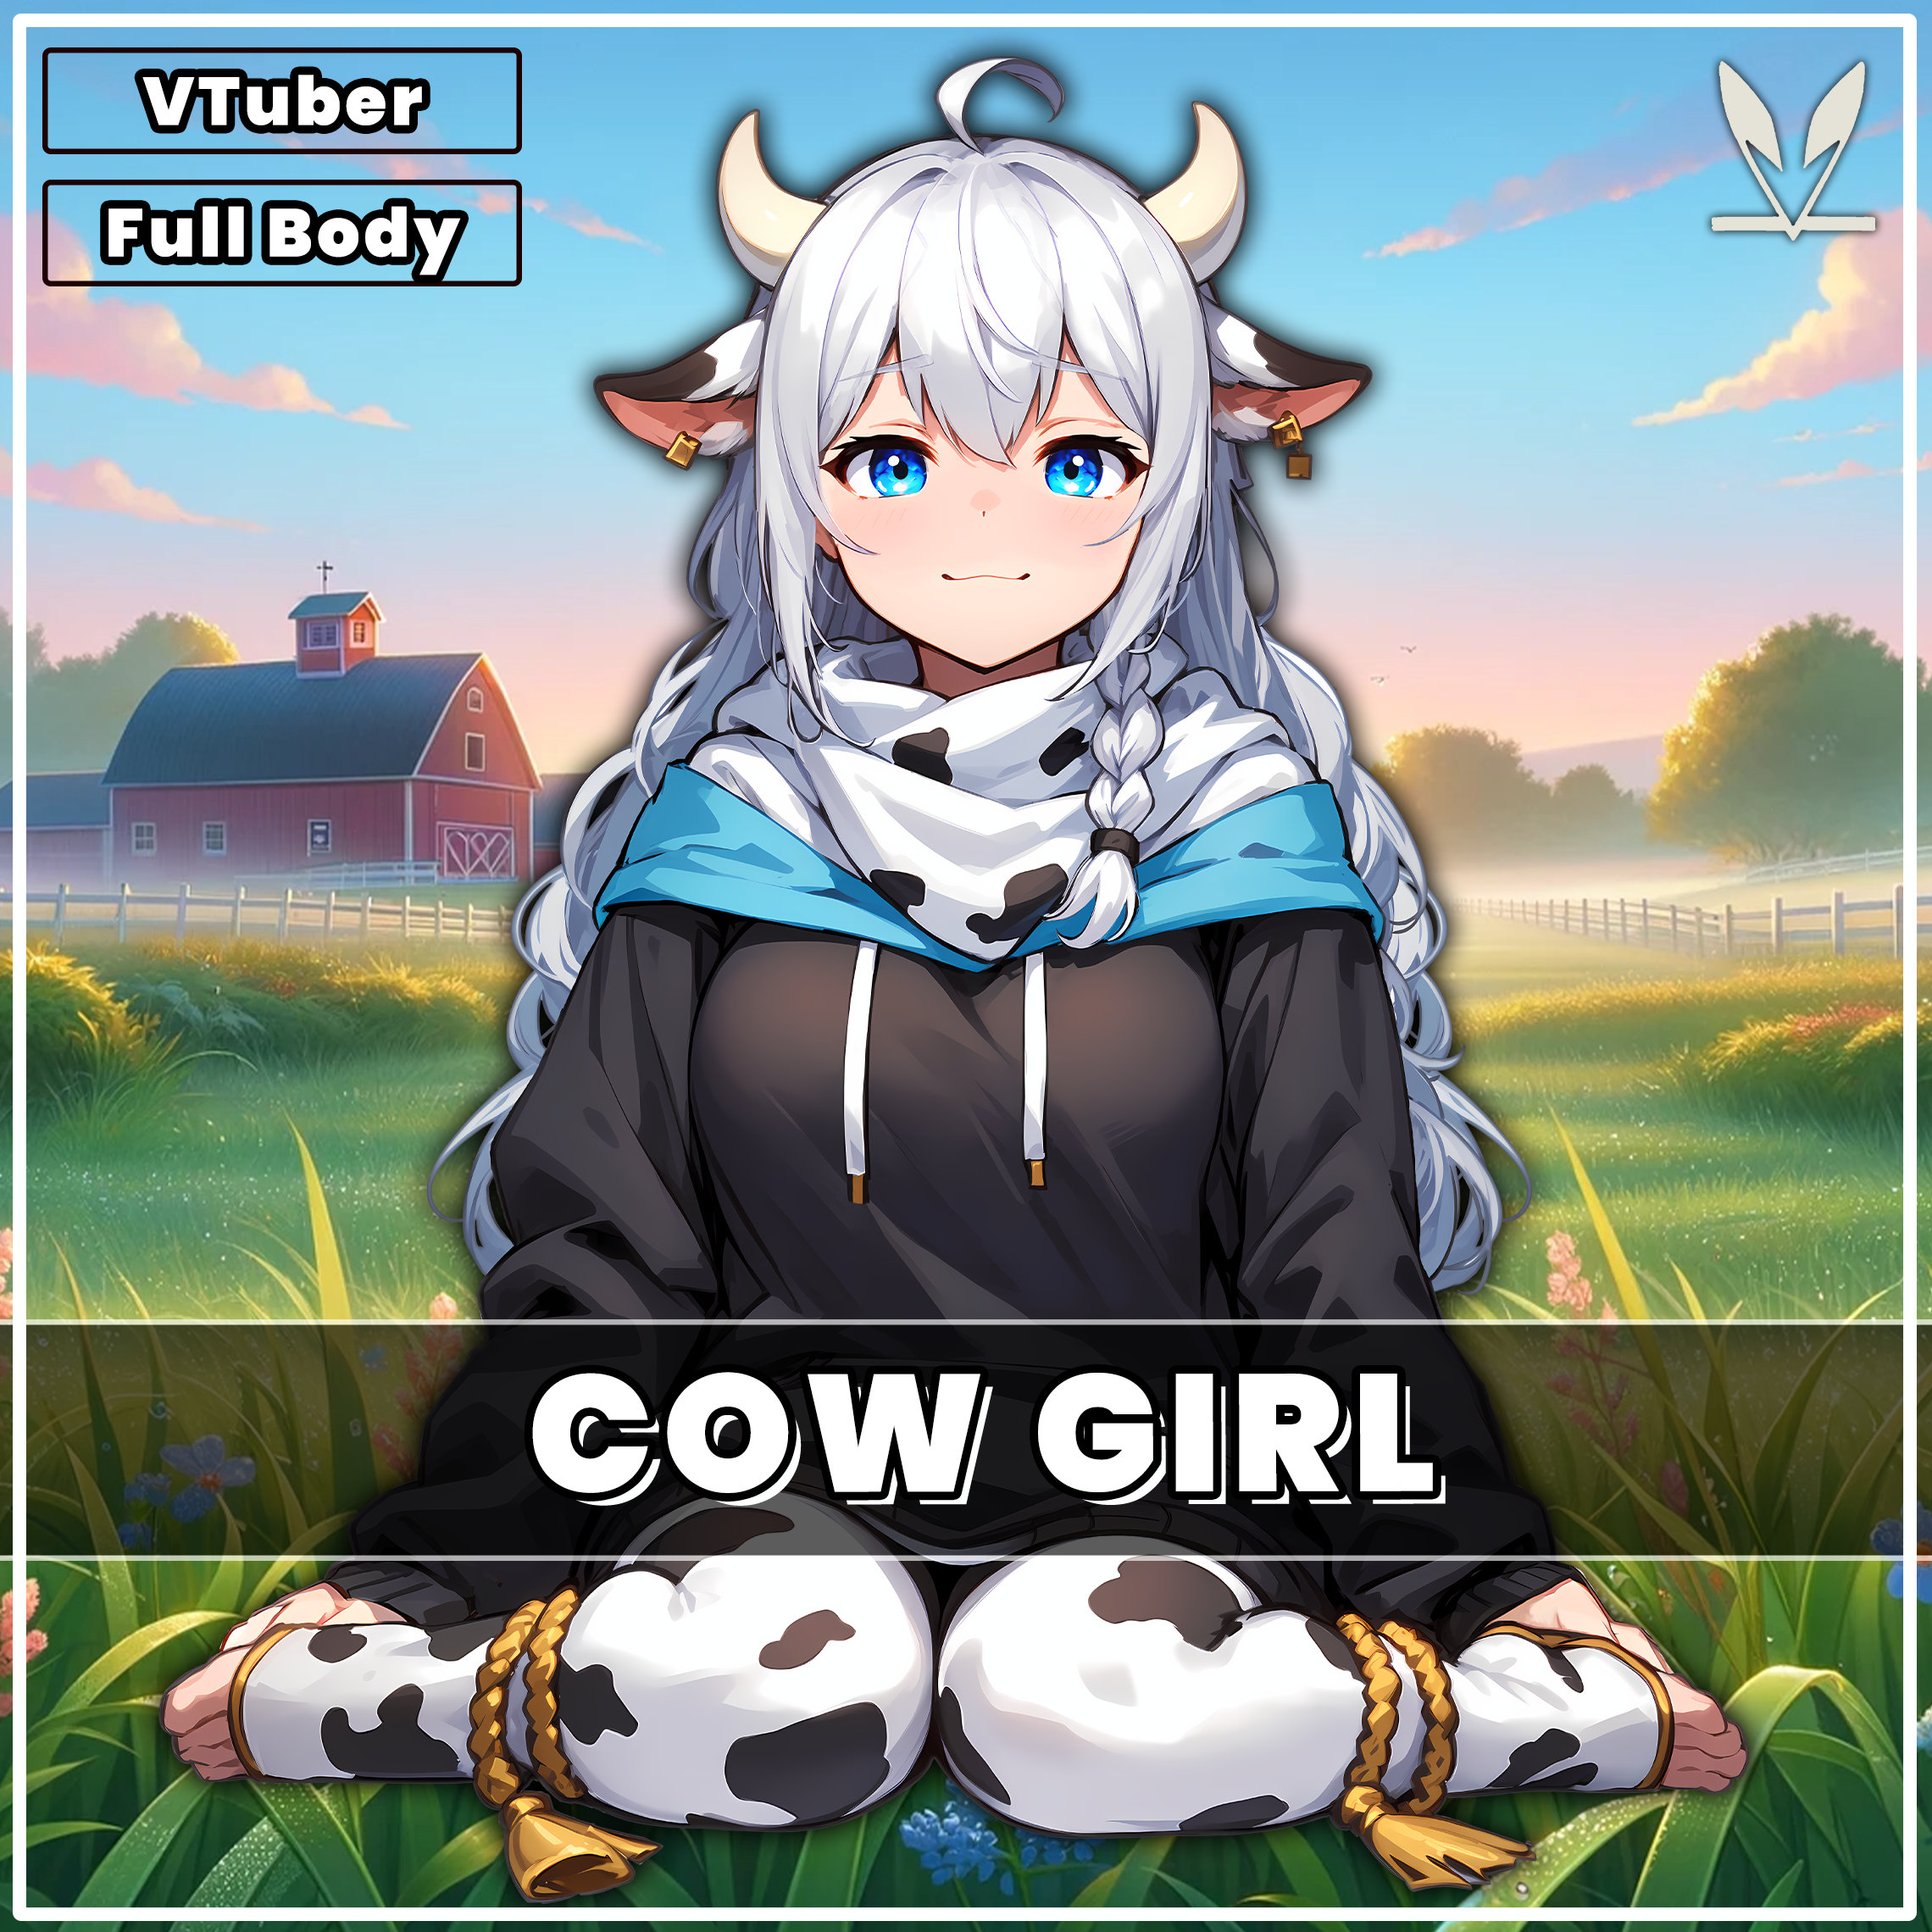 Cute cow. Funny cartoon cows, milk farm... - Stock Illustration [106945892]  - PIXTA